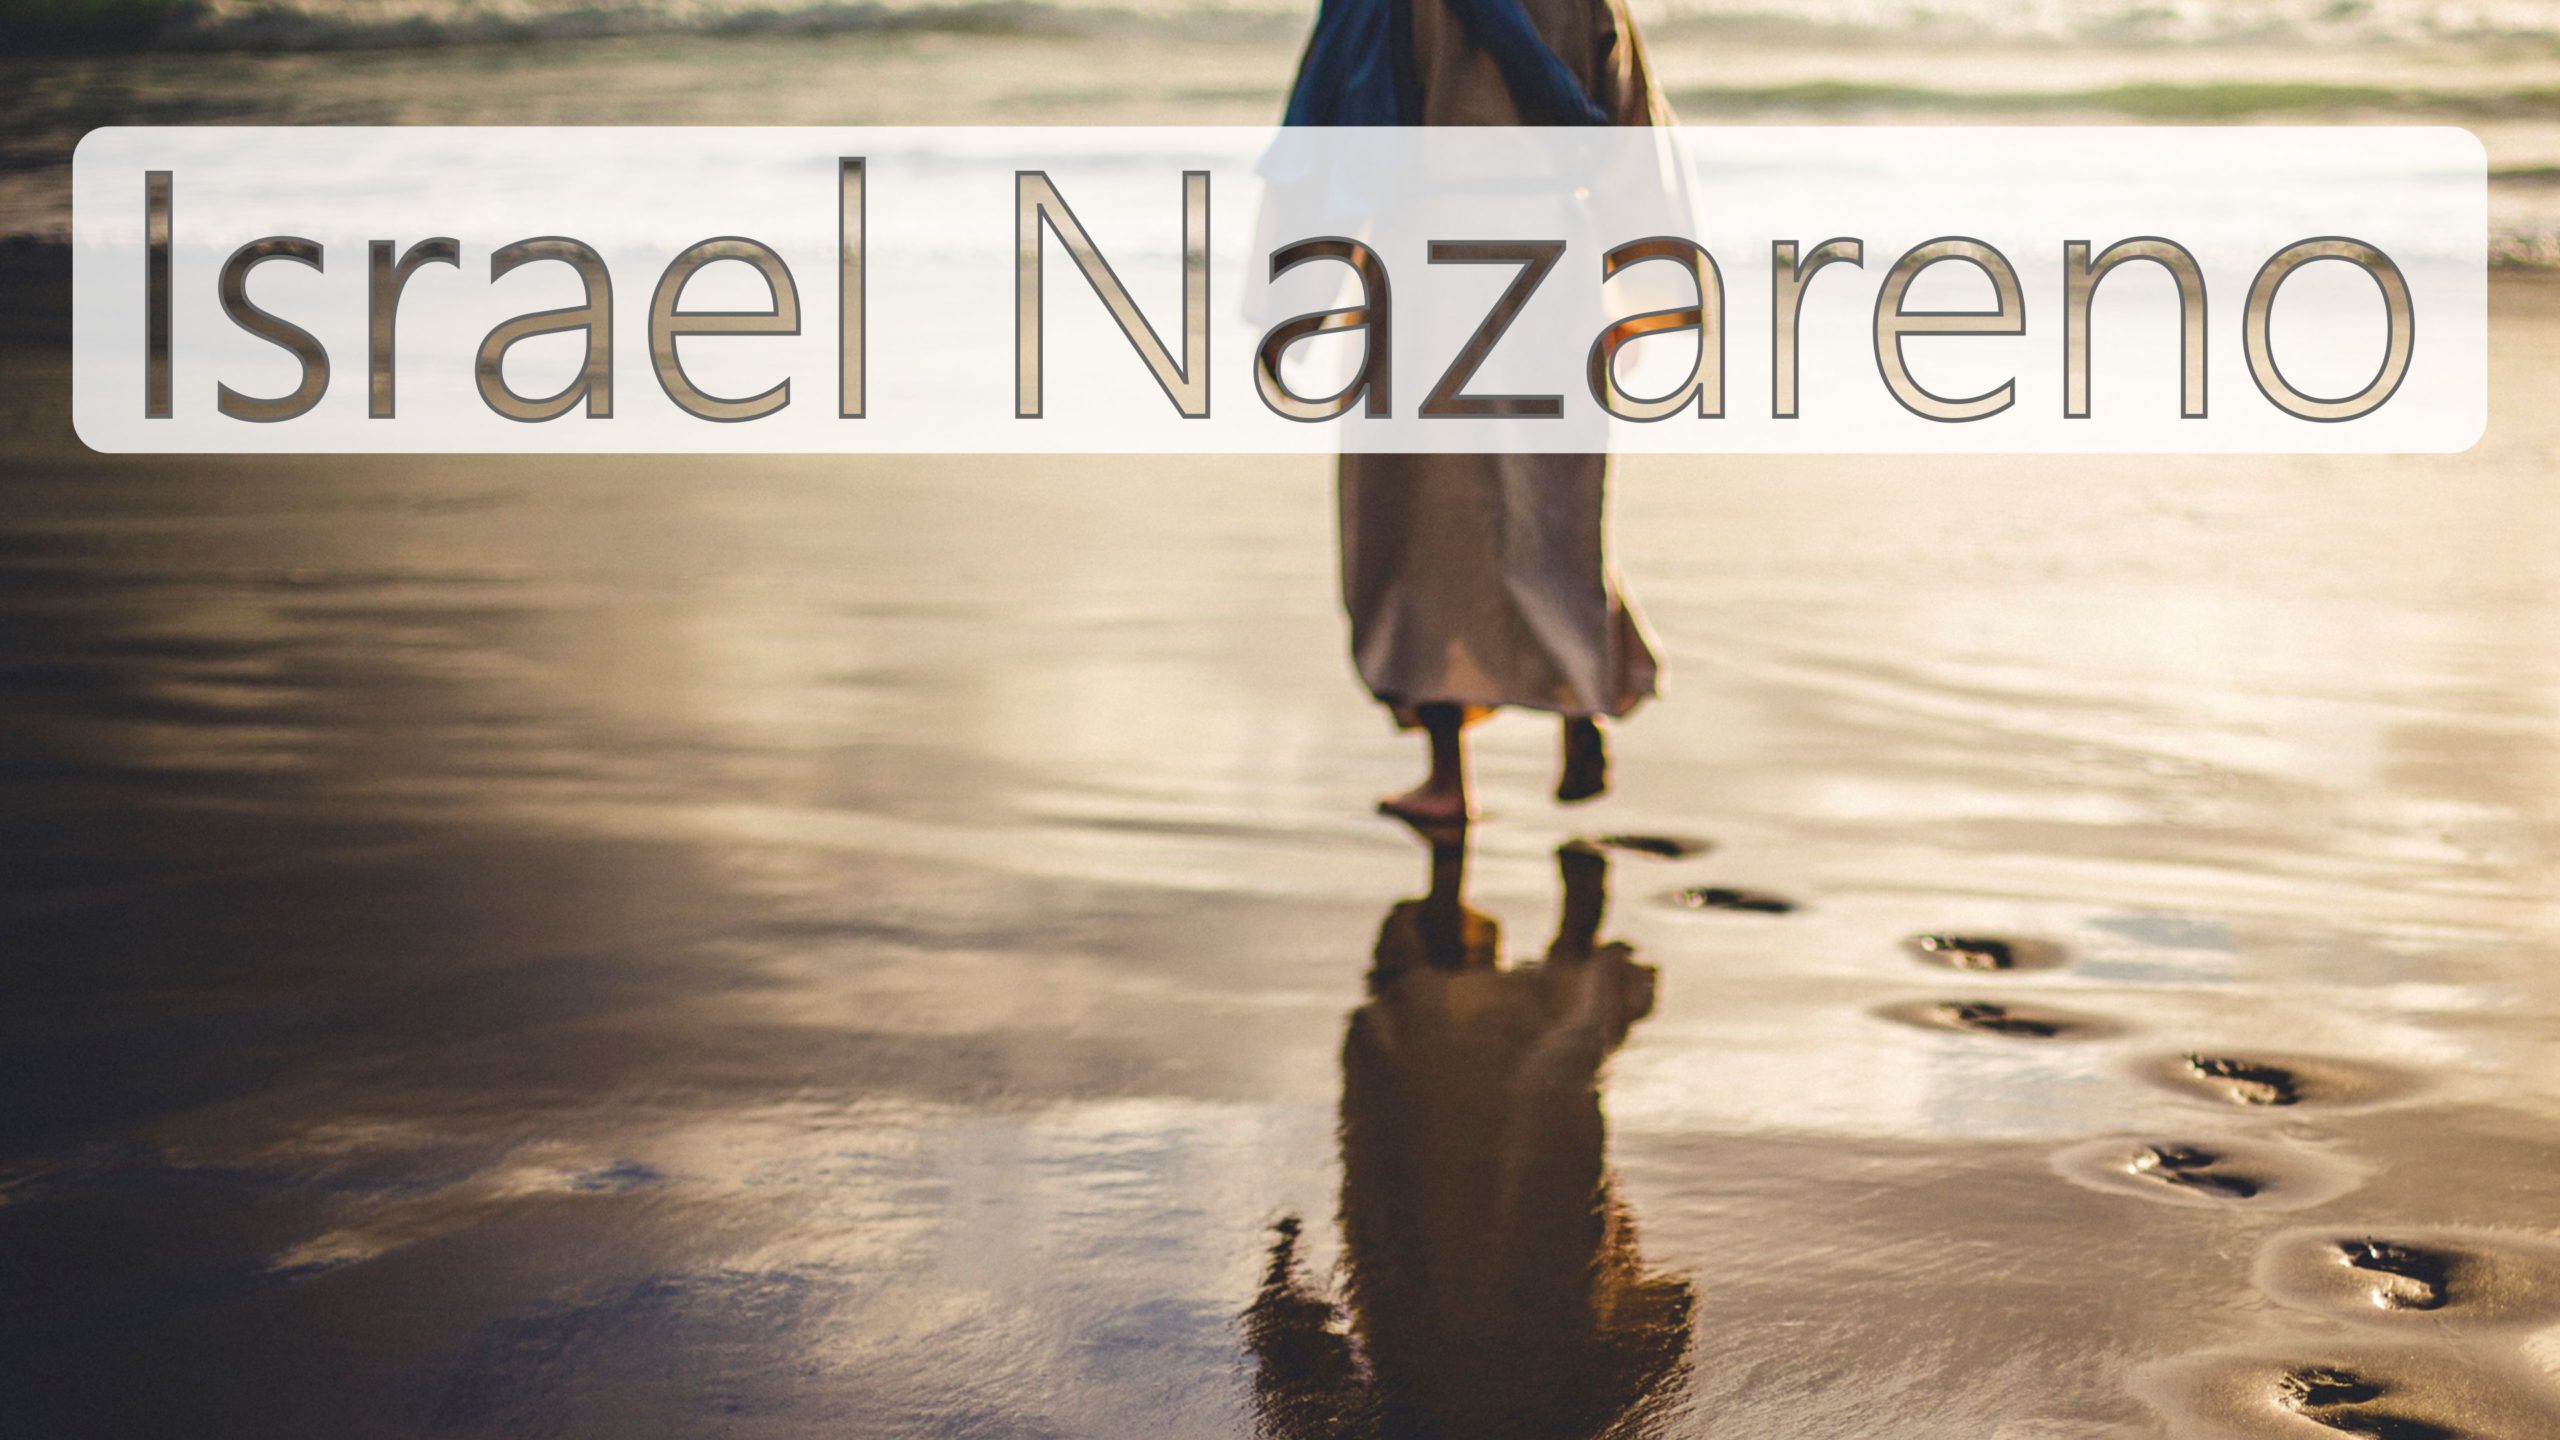 Israel Nazareno